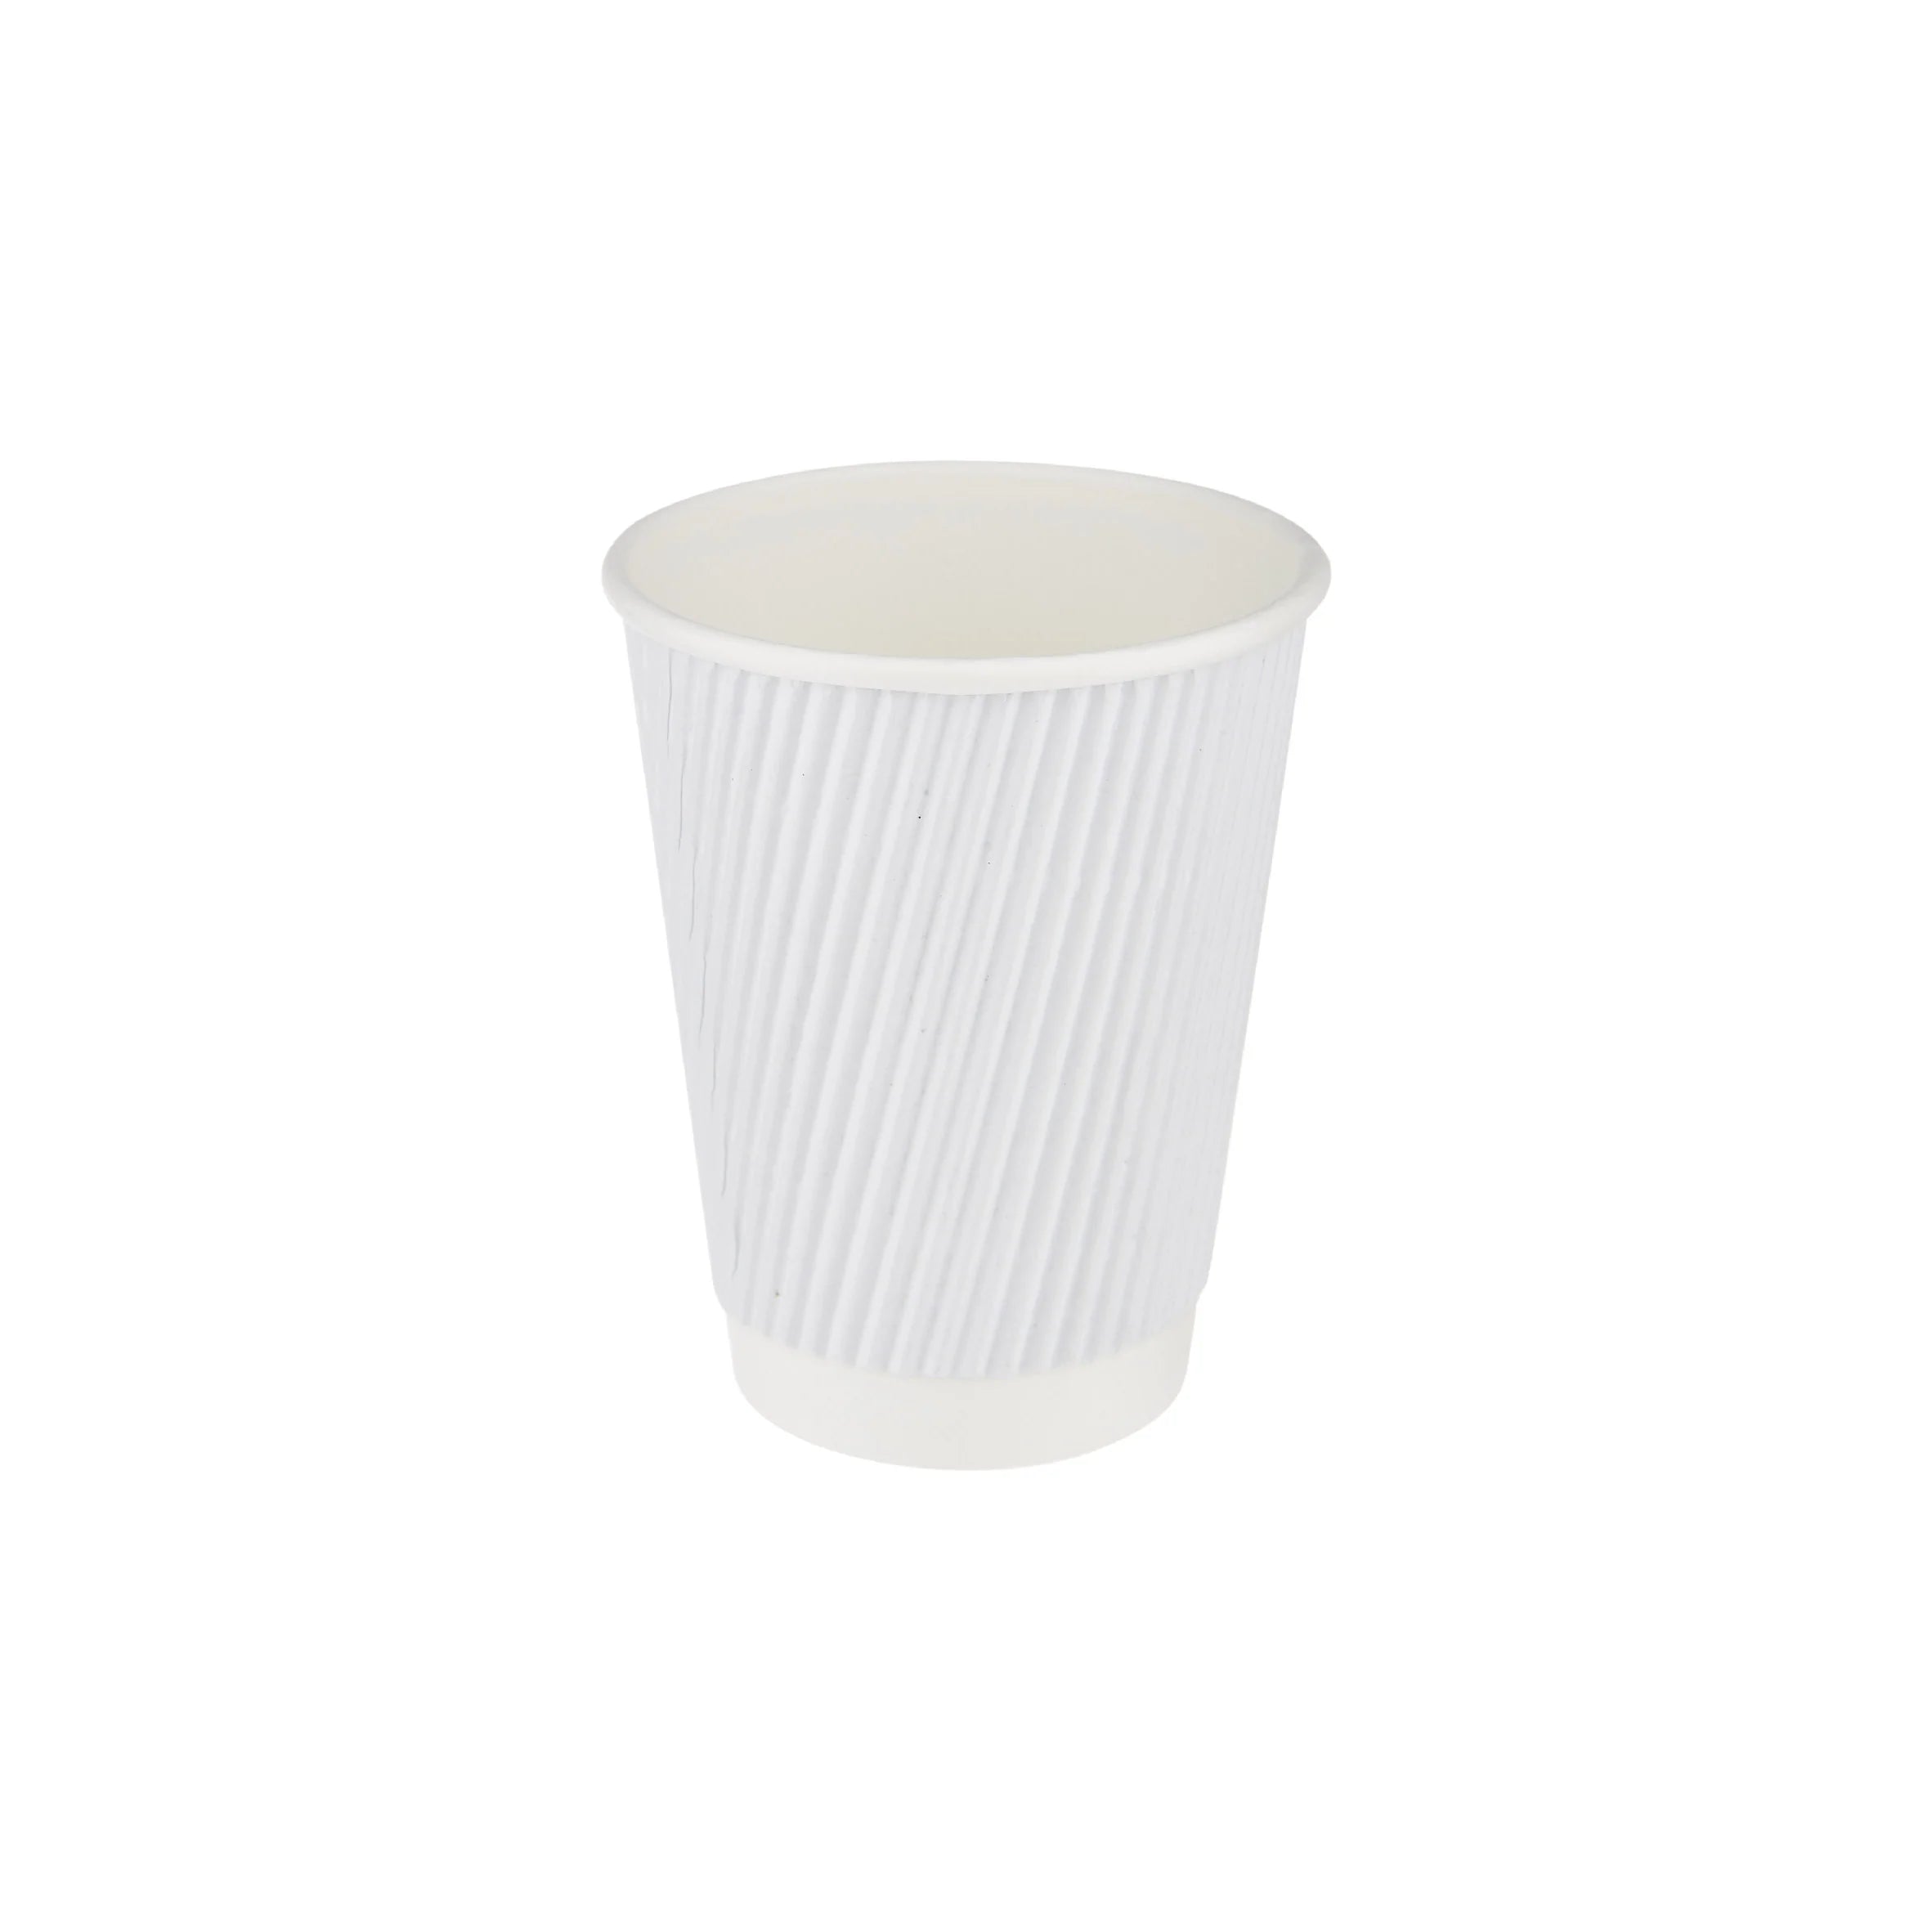 White Ripple Cup, 16 Oz (480 ml)| 500 Pieces-Hotpack Bahrain